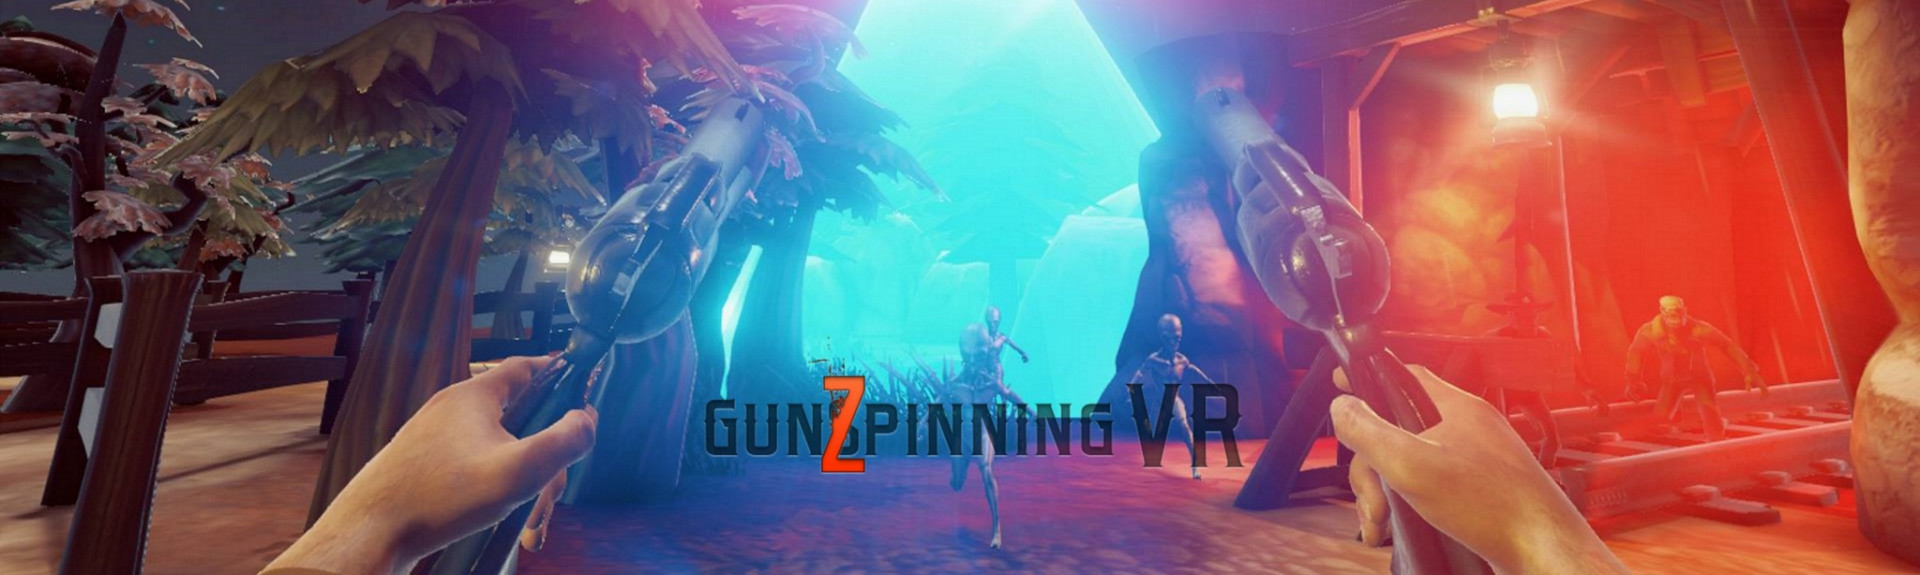 GunSpinning VR